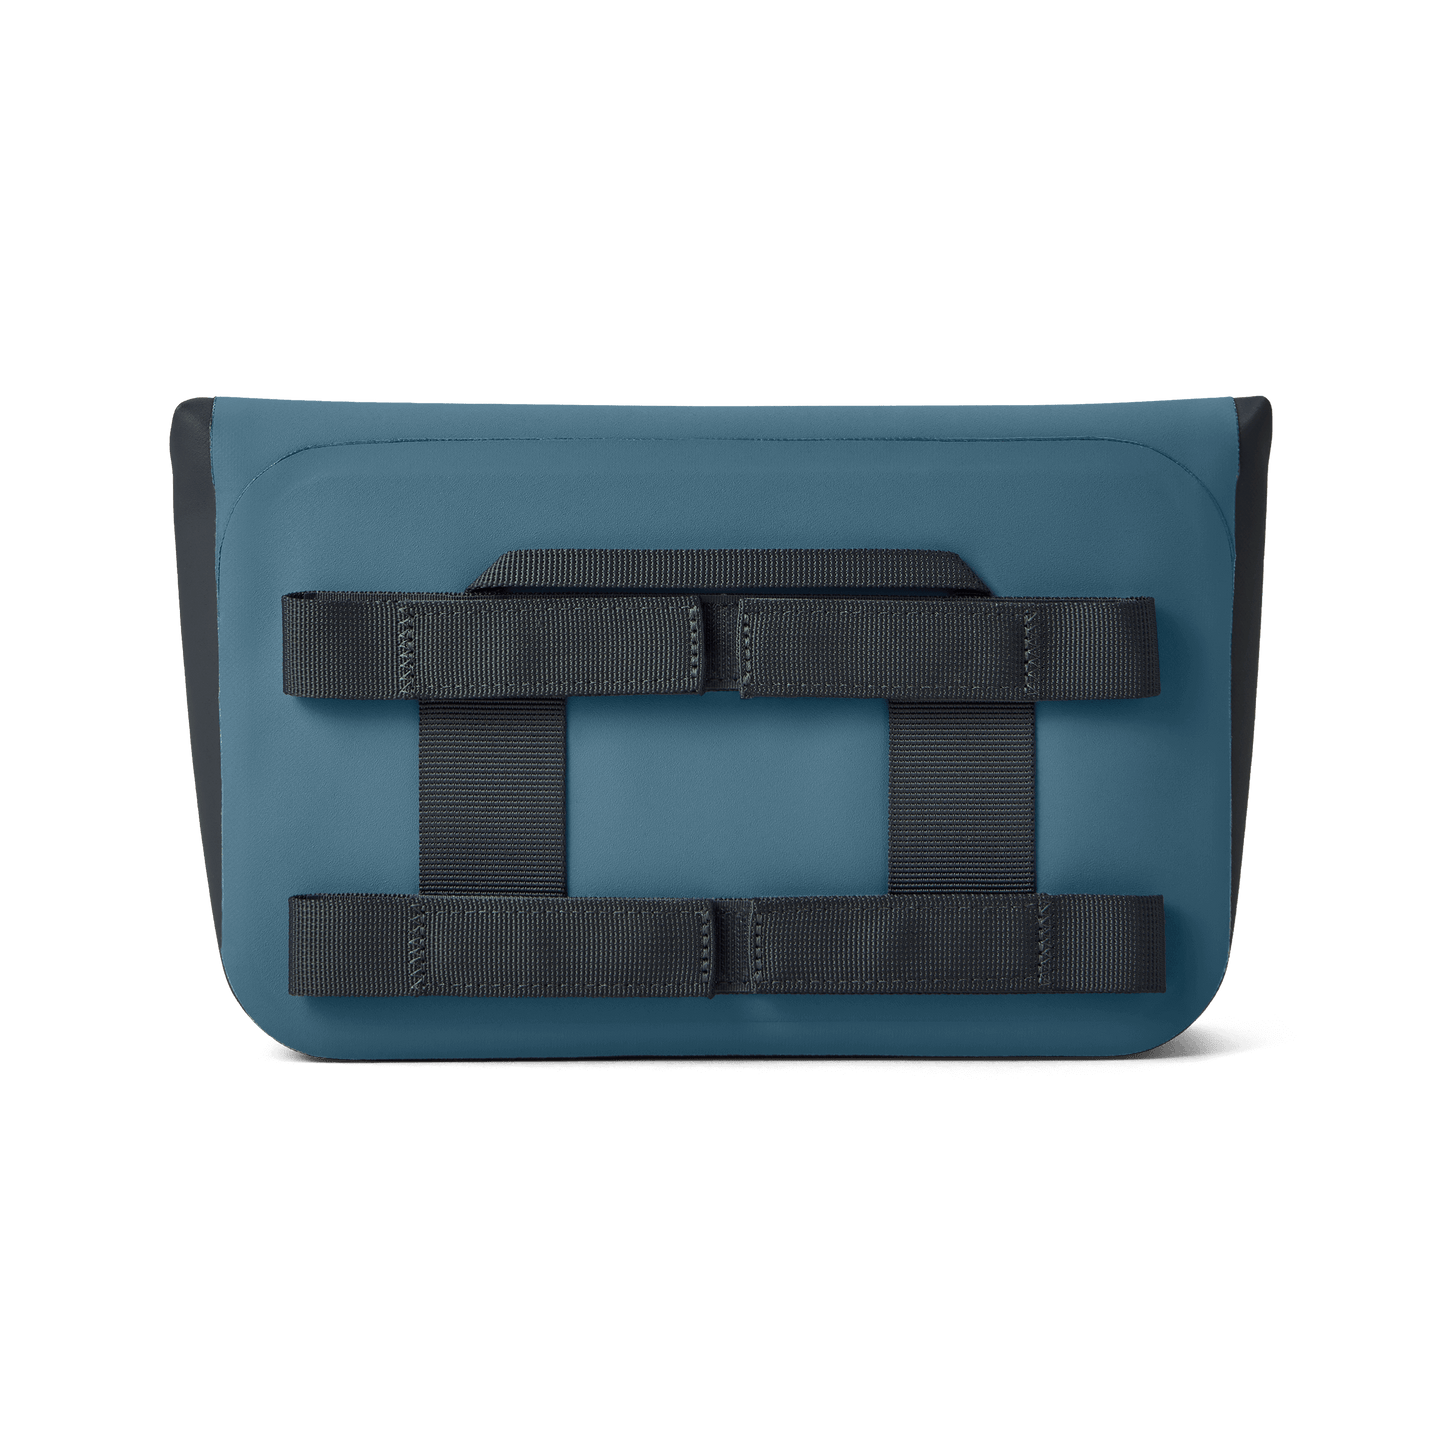 YETI Sidekick Dry® Custodia portaoggetti Nordic Blue